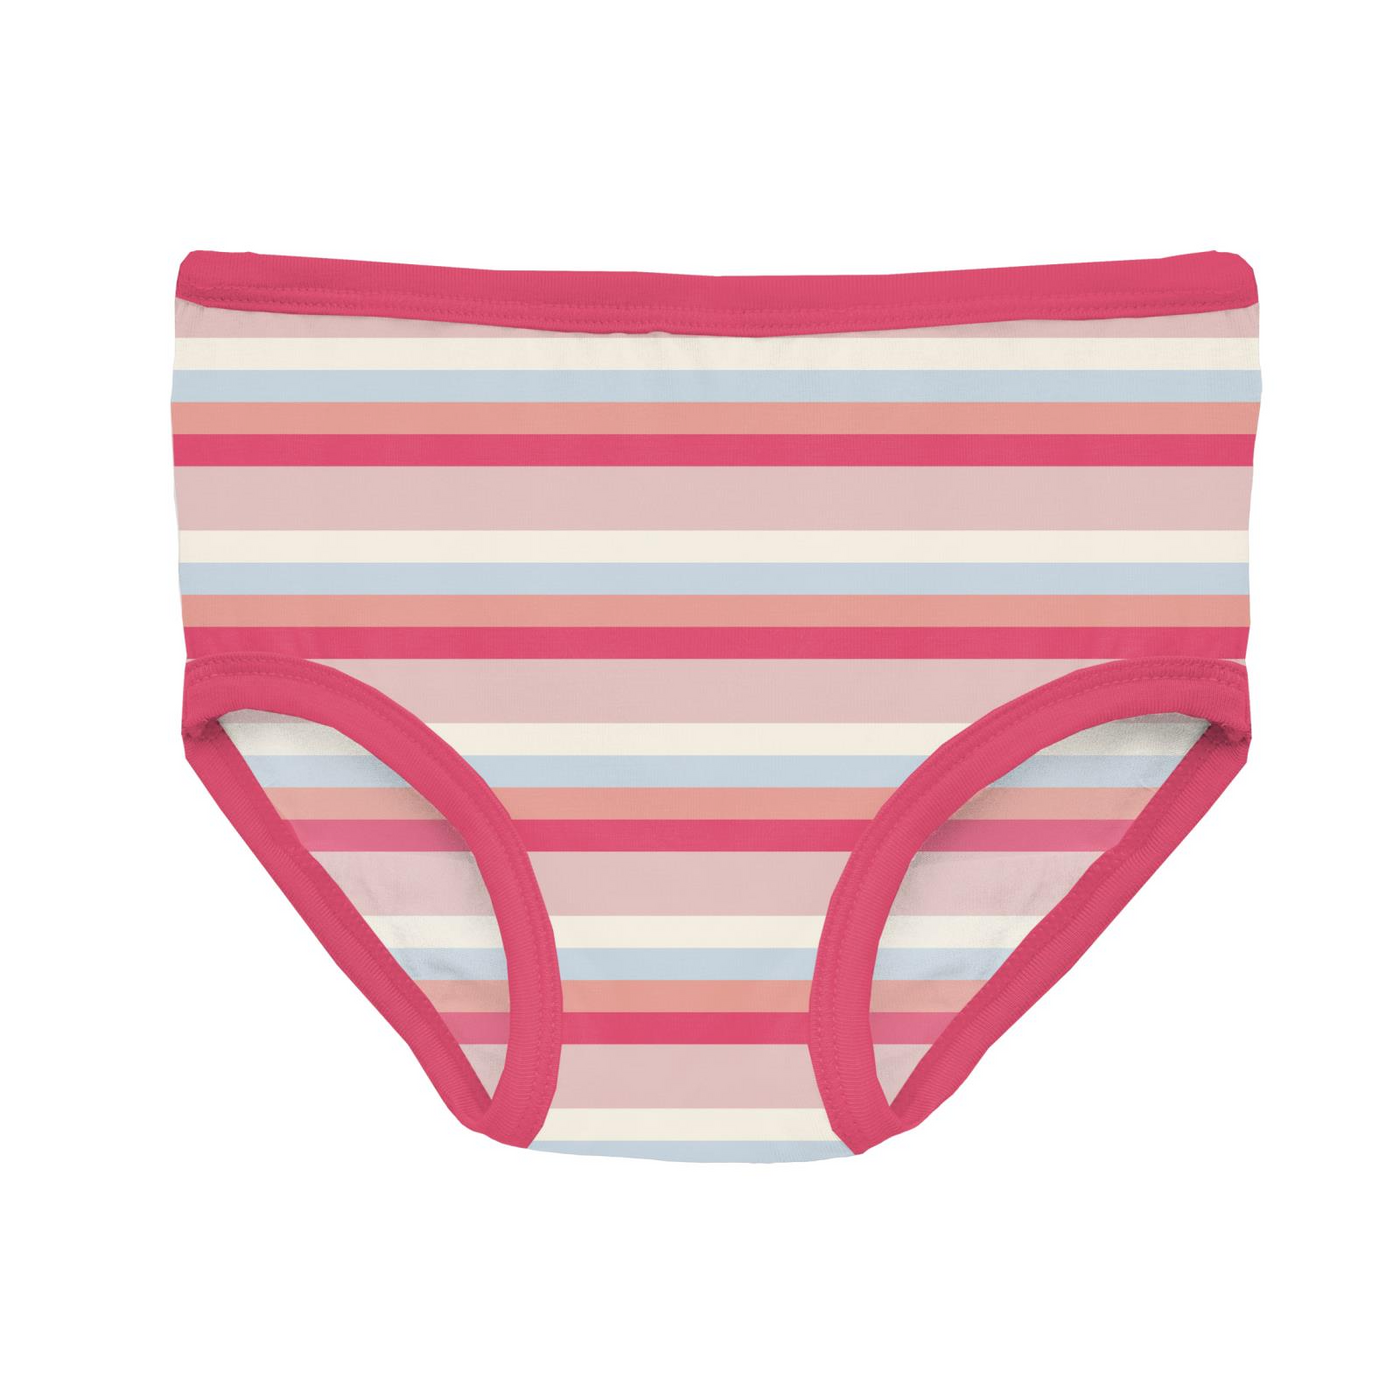 Kickee Pants Girls Underwear: Baby Rose Stripe